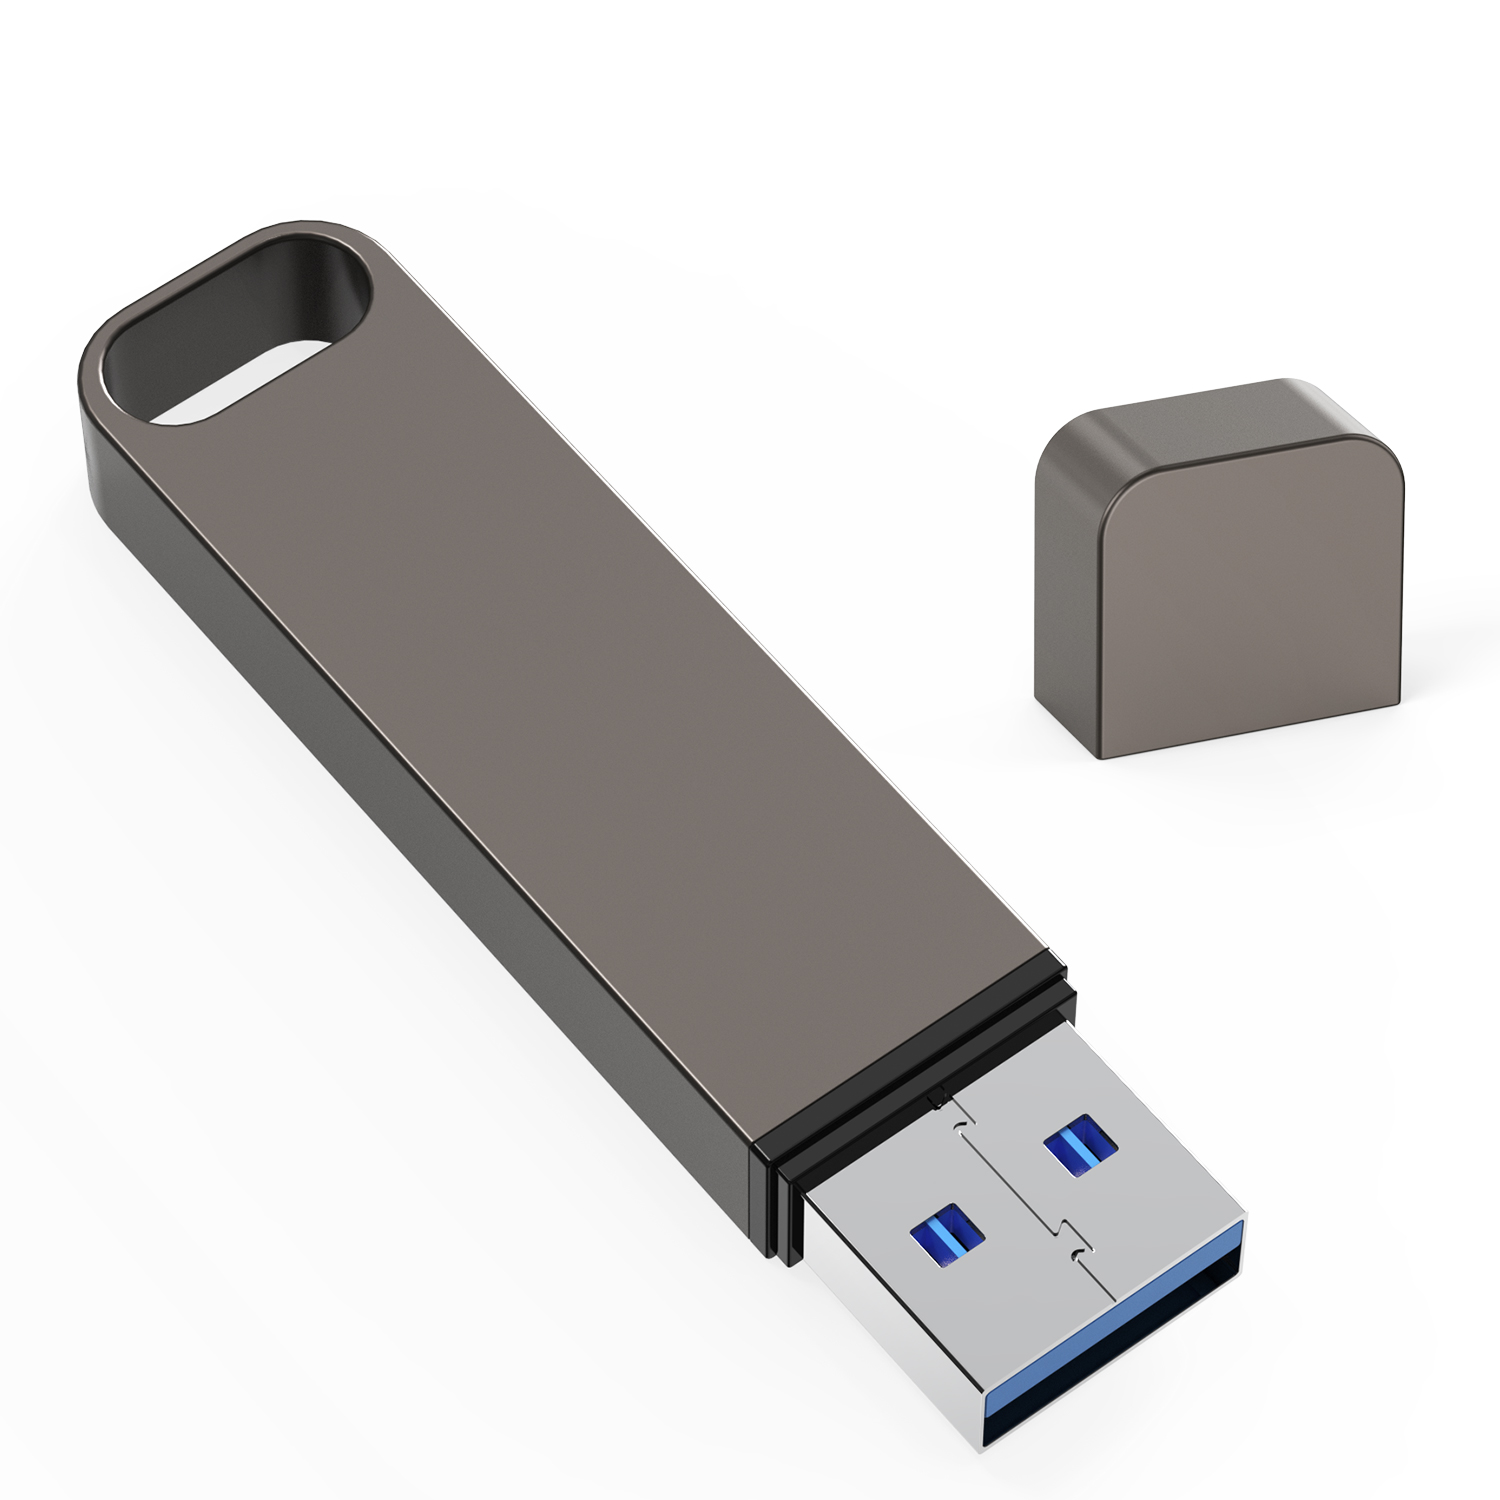 Kissin External SSD USB 3.1 Interface Transfer Speed 400MS (1)